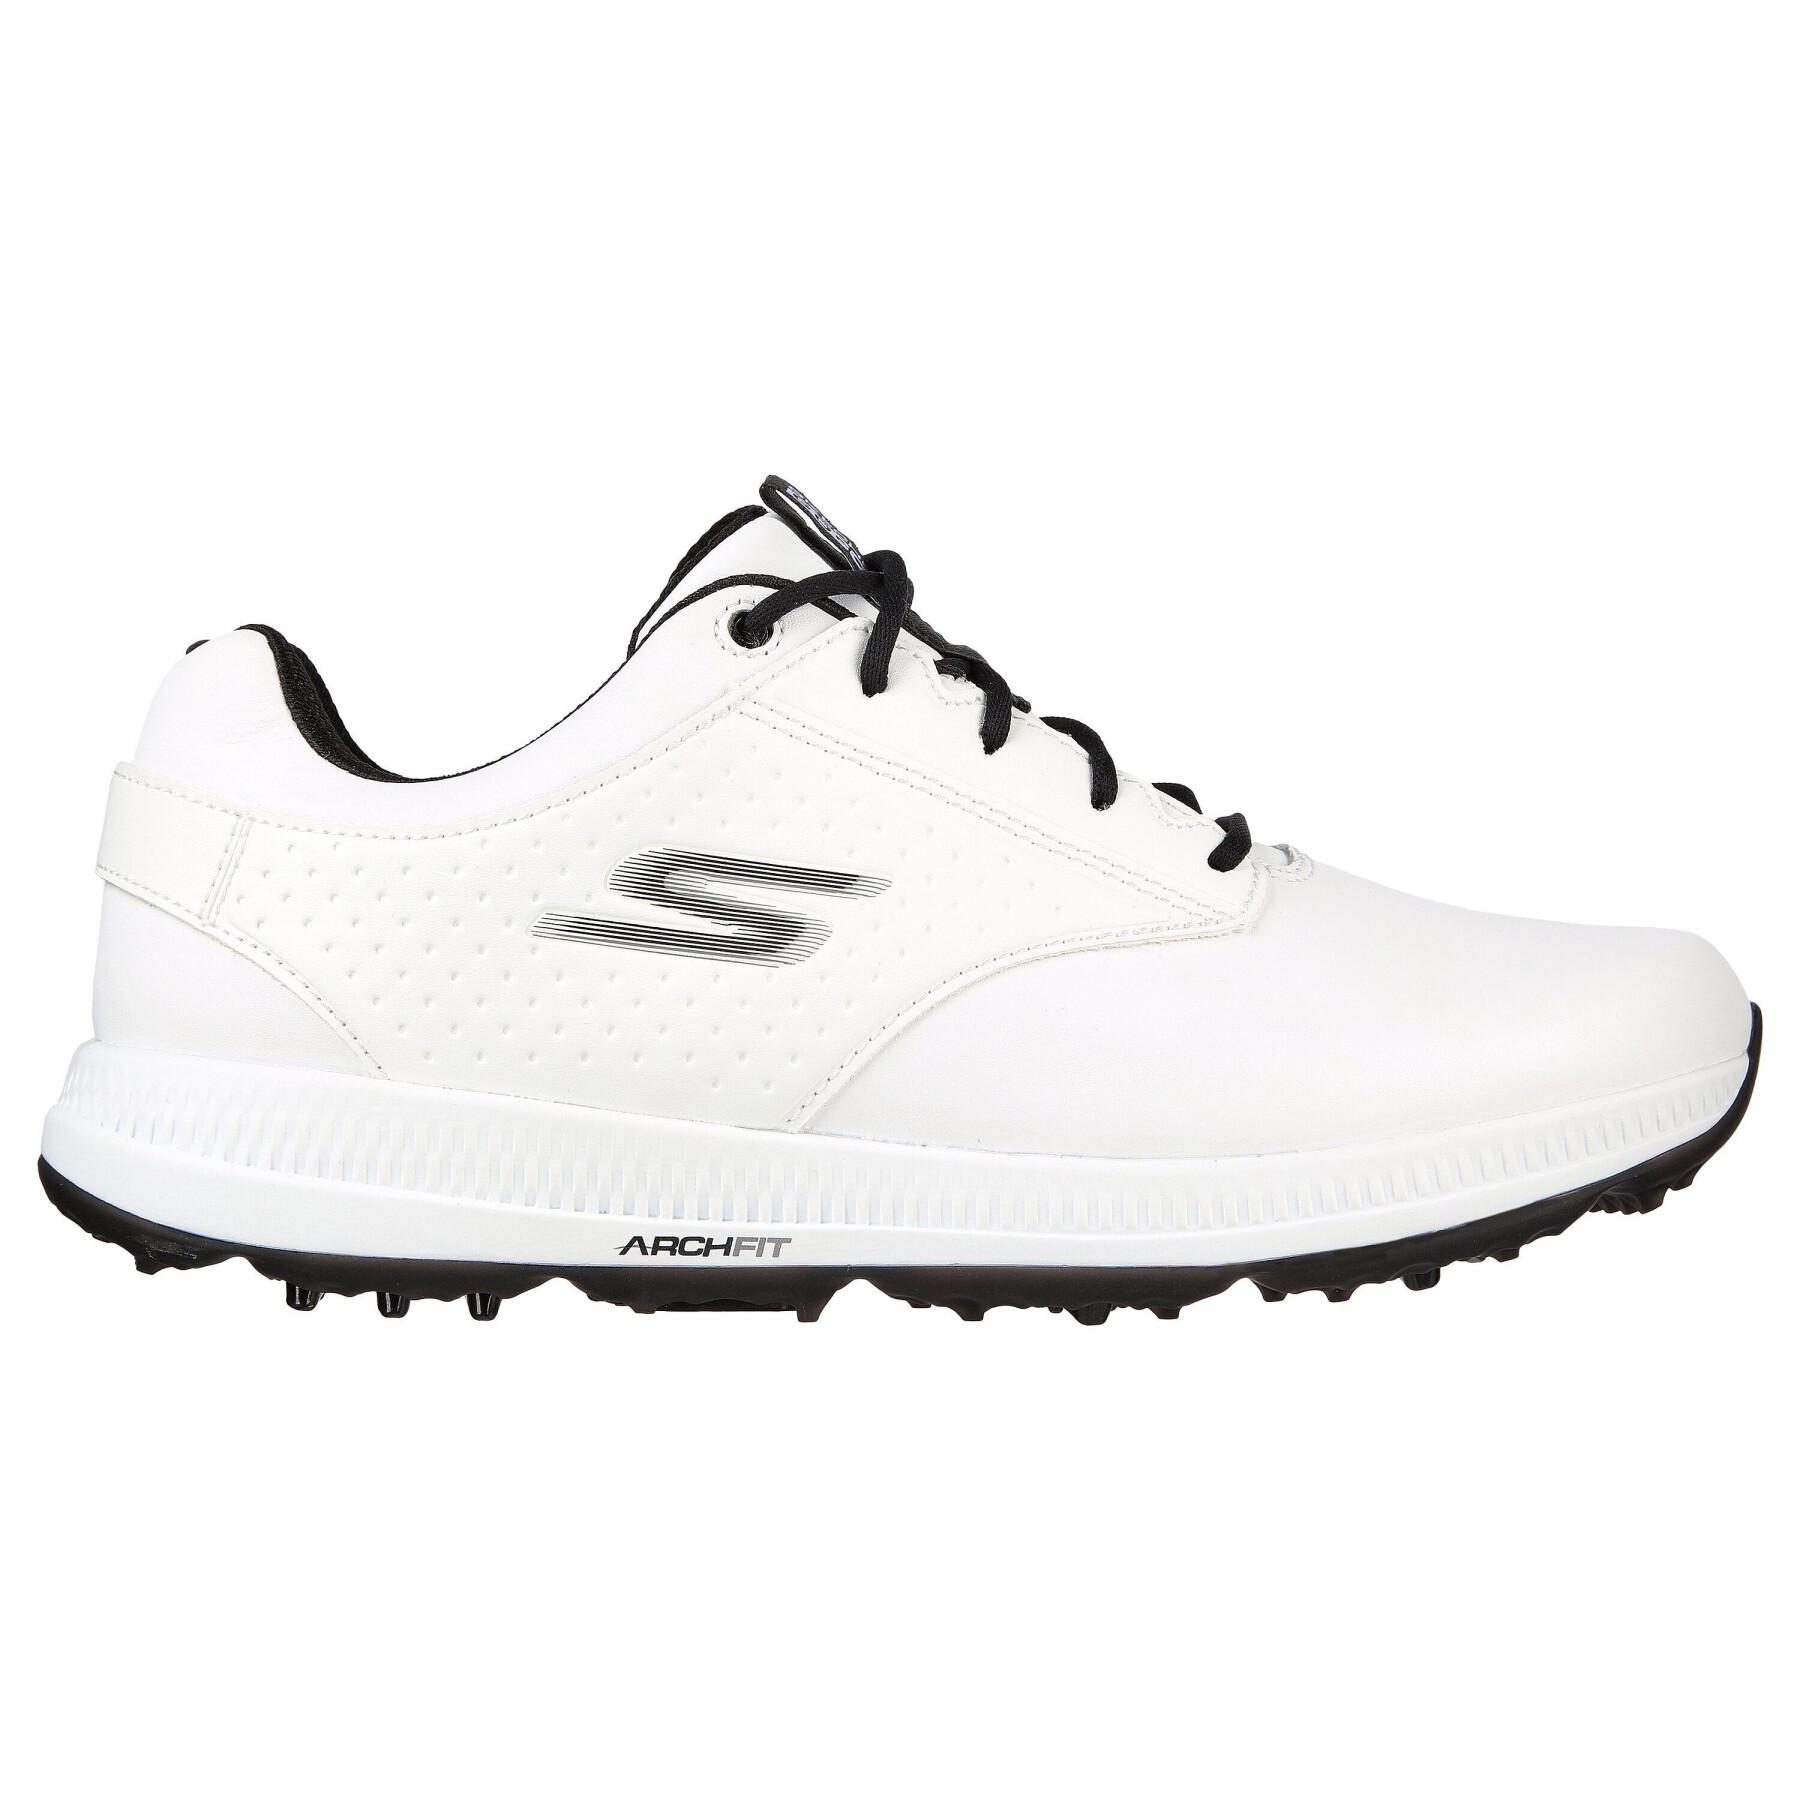 Spikeless golf shoes Skechers GO GOLF Elite 5 - Legend